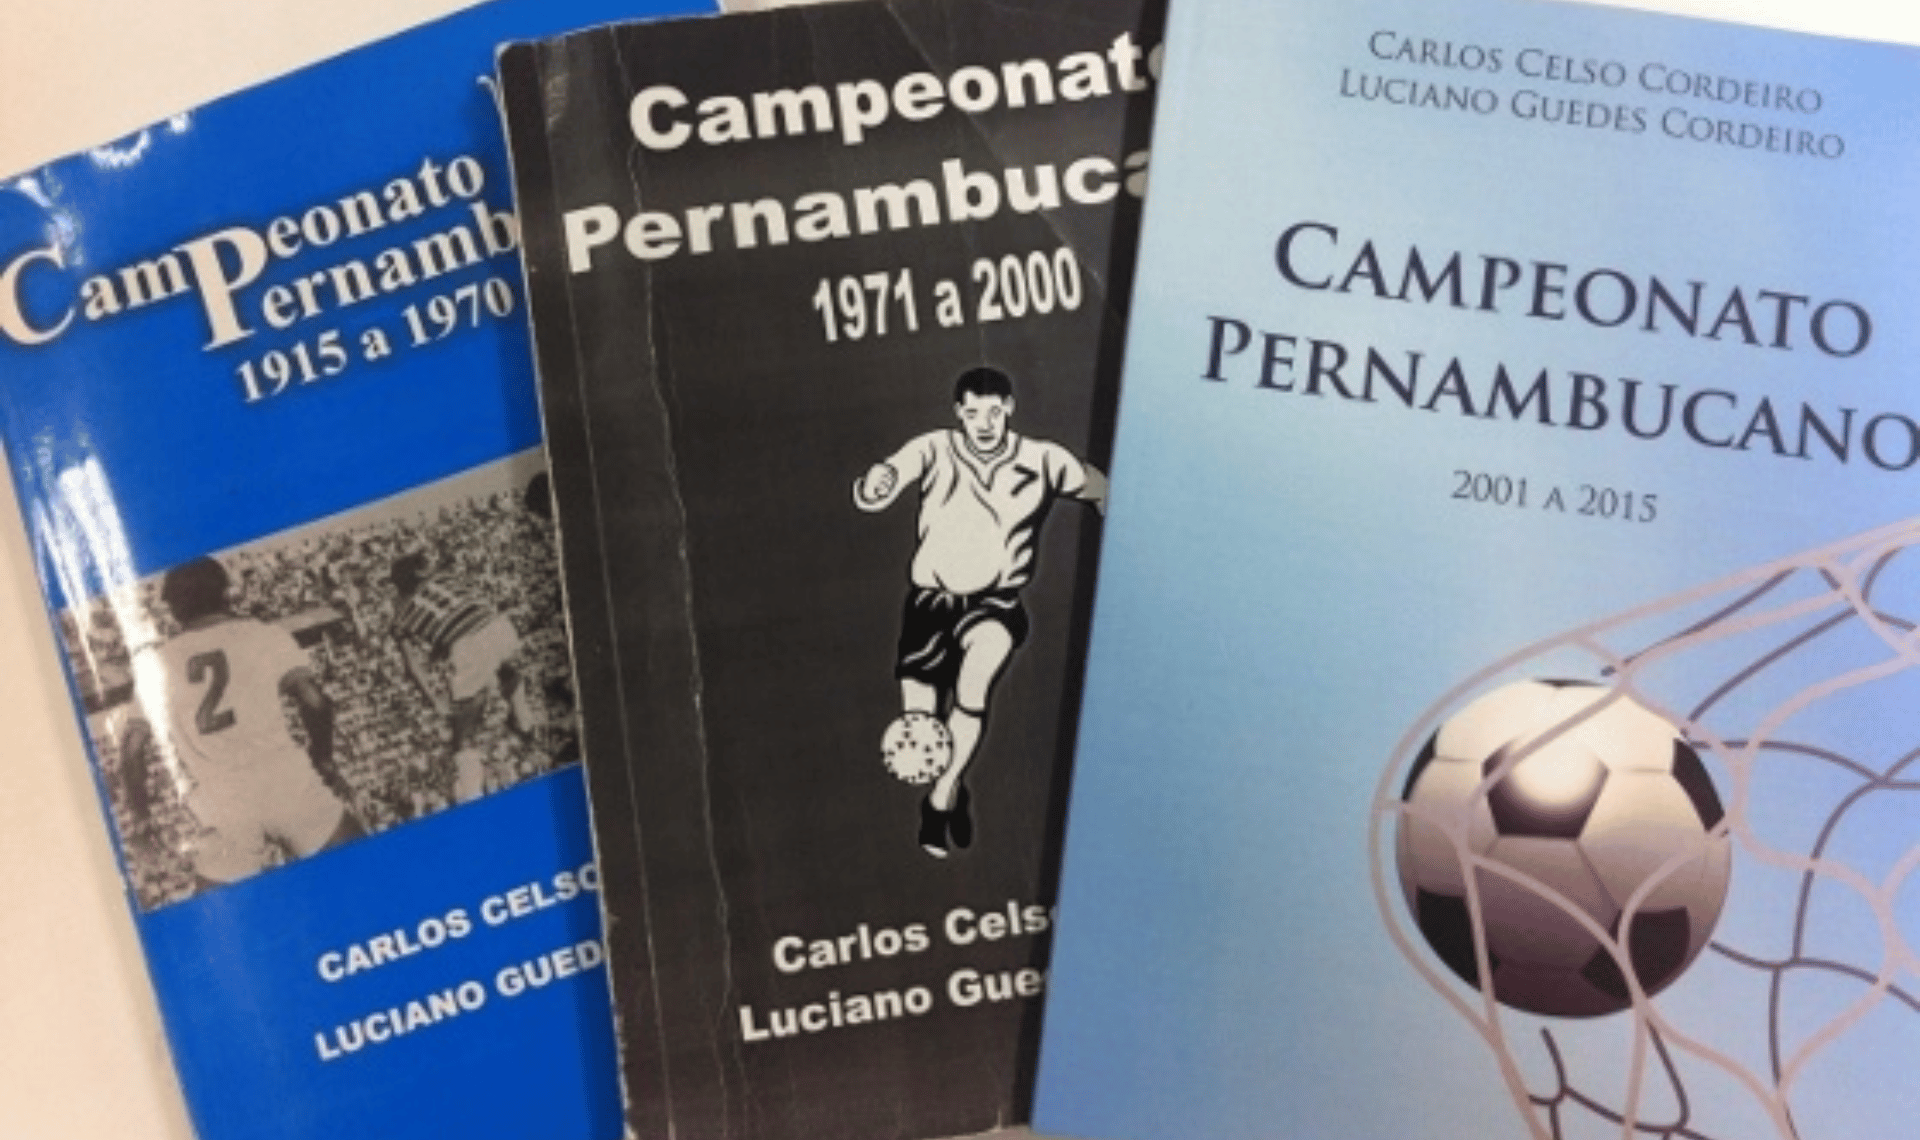 Campeonato pernambucano de futebol